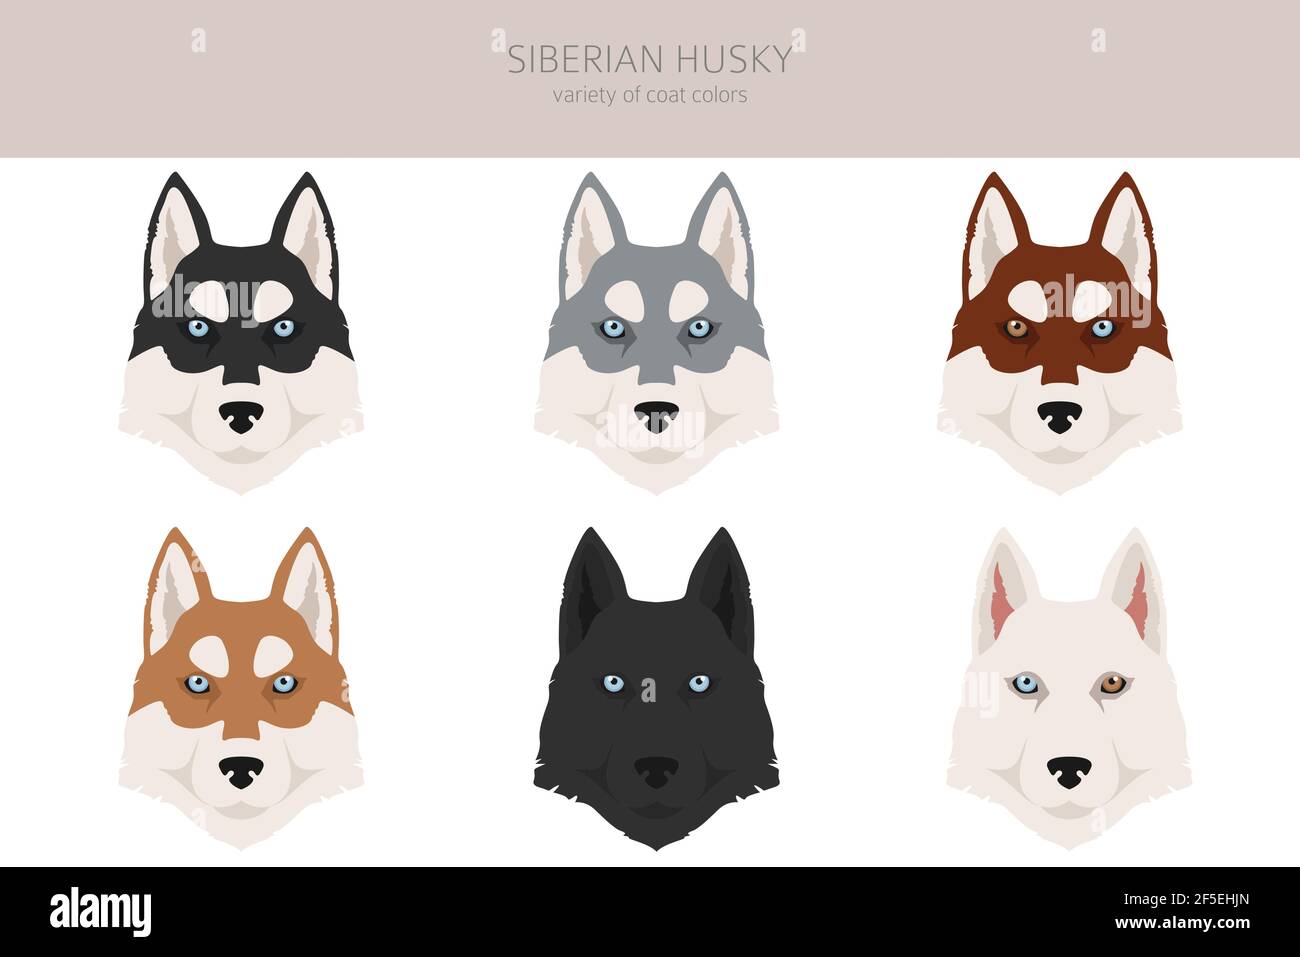 Siberian husky farben